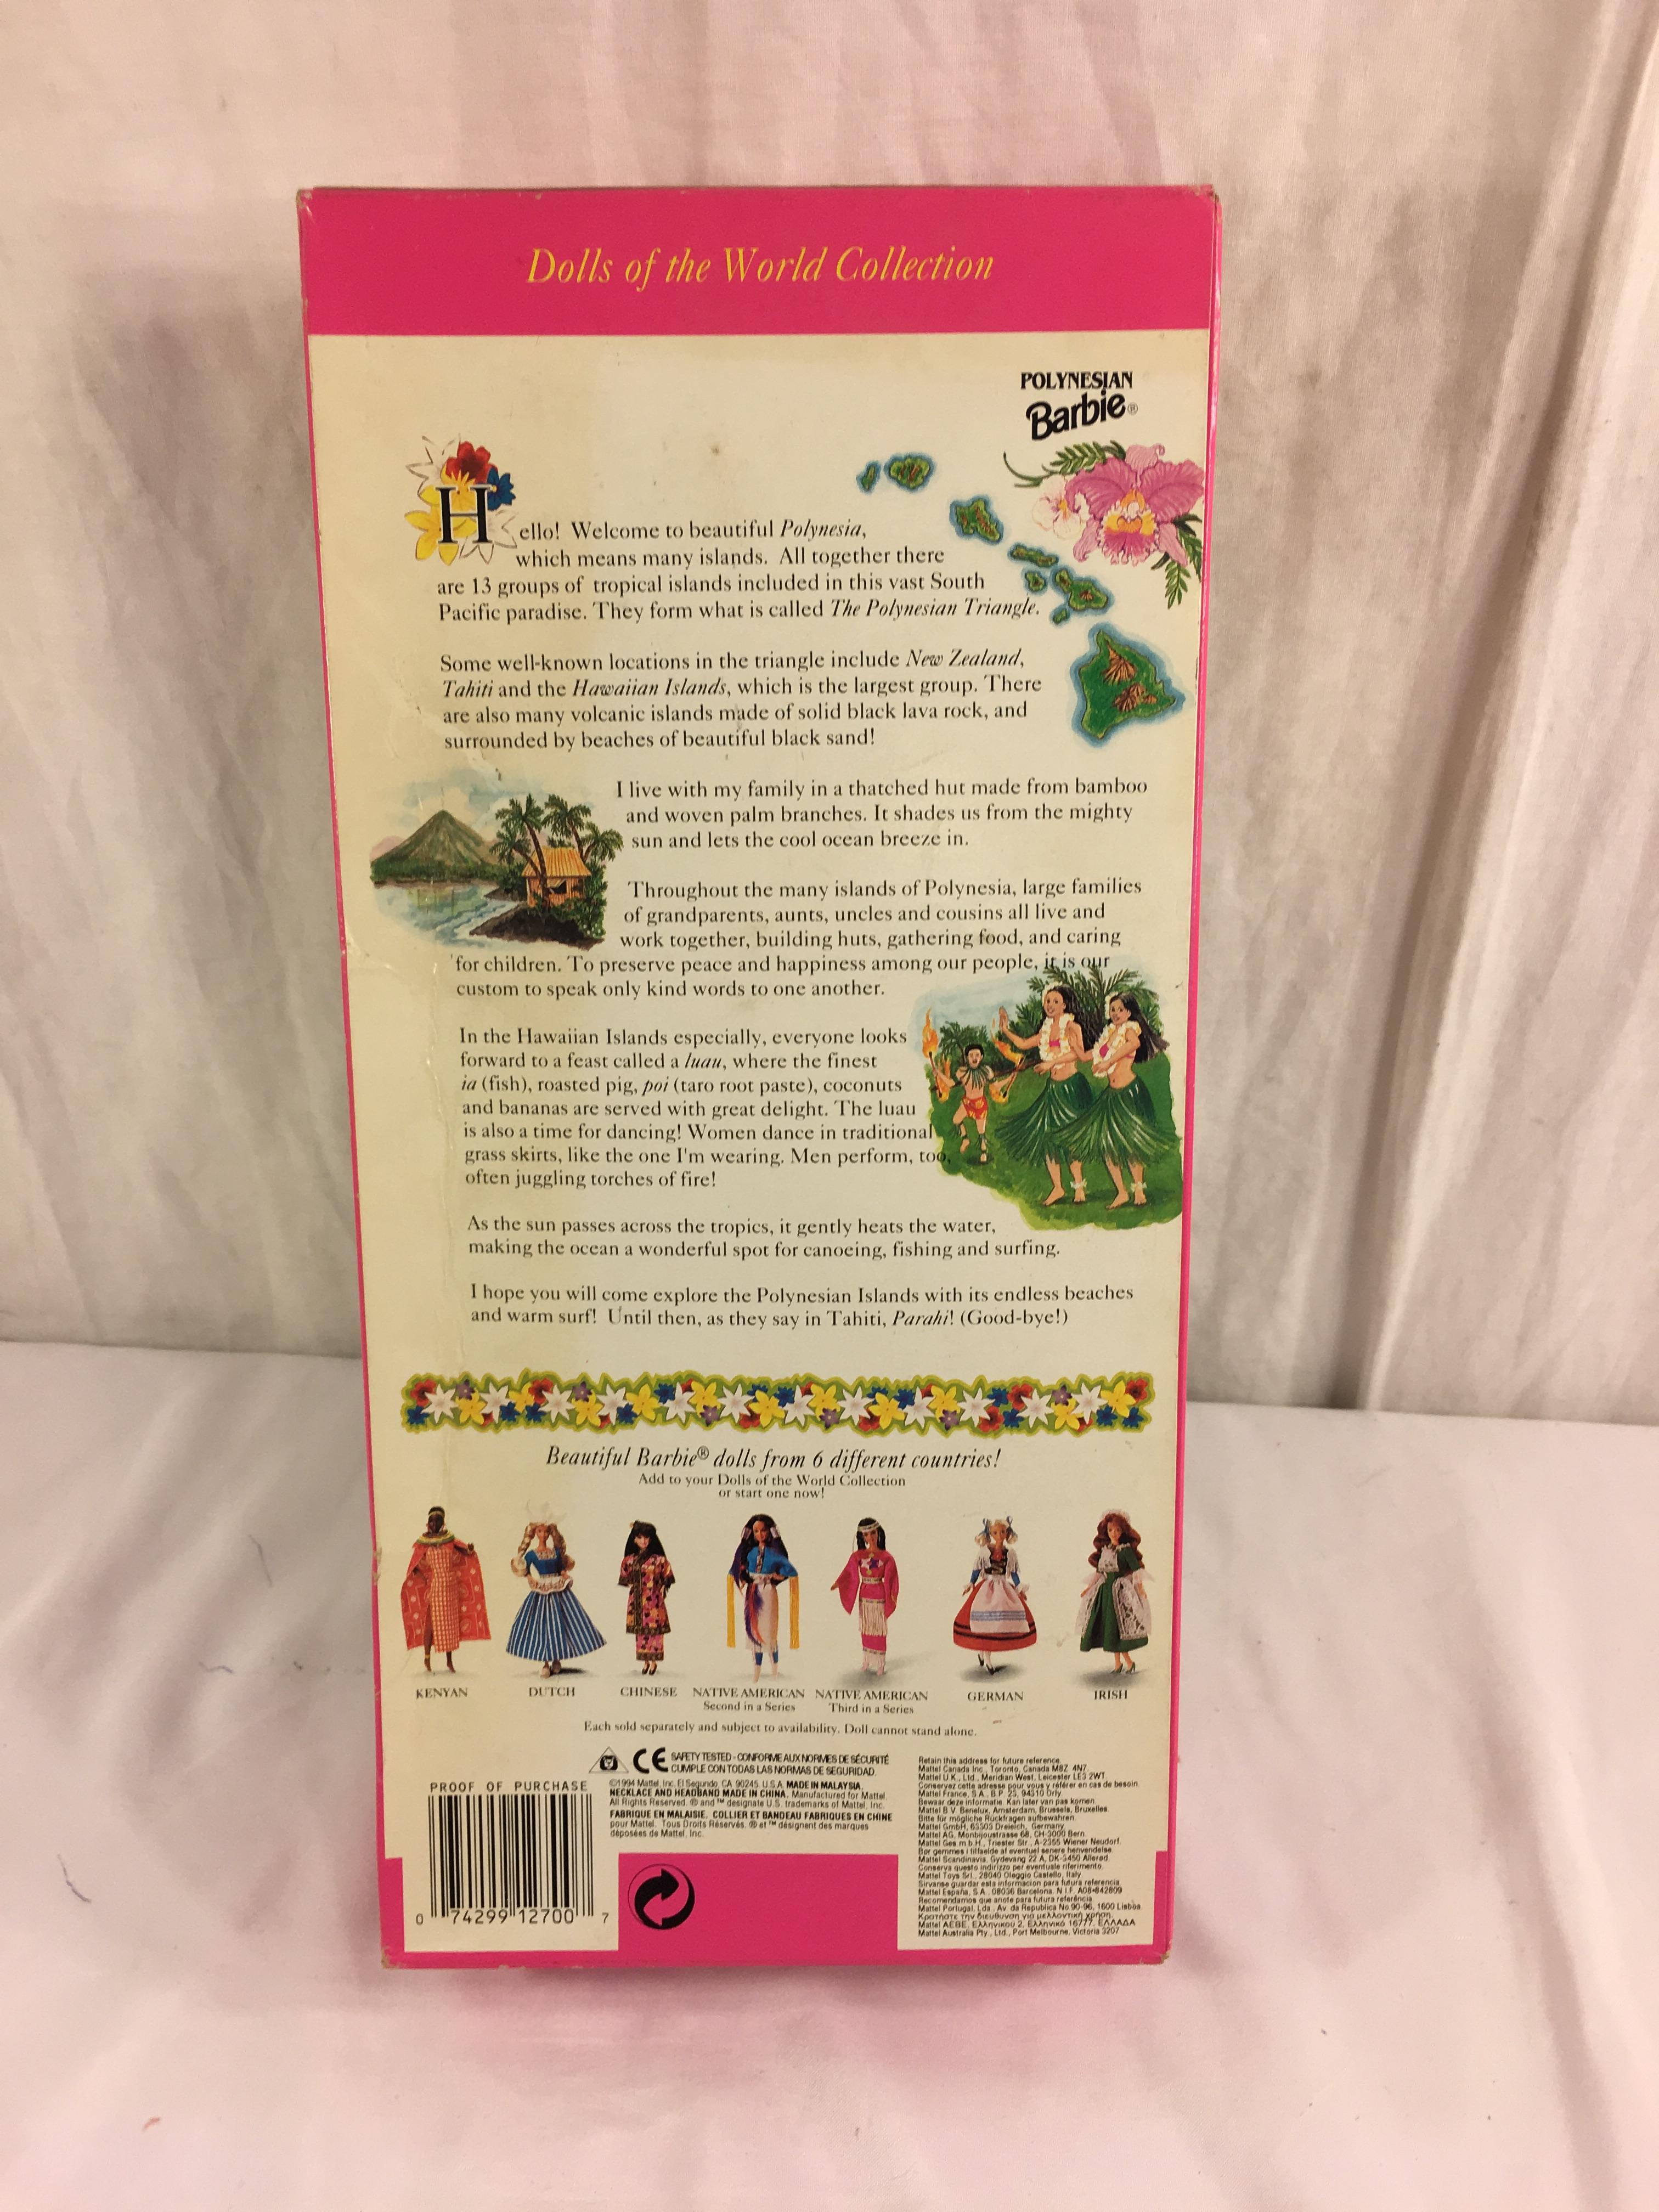 NIB Collector Edition Barbie Mattel Dolls Of The World Polynesian 12700 Size Box: 12"Tall Box